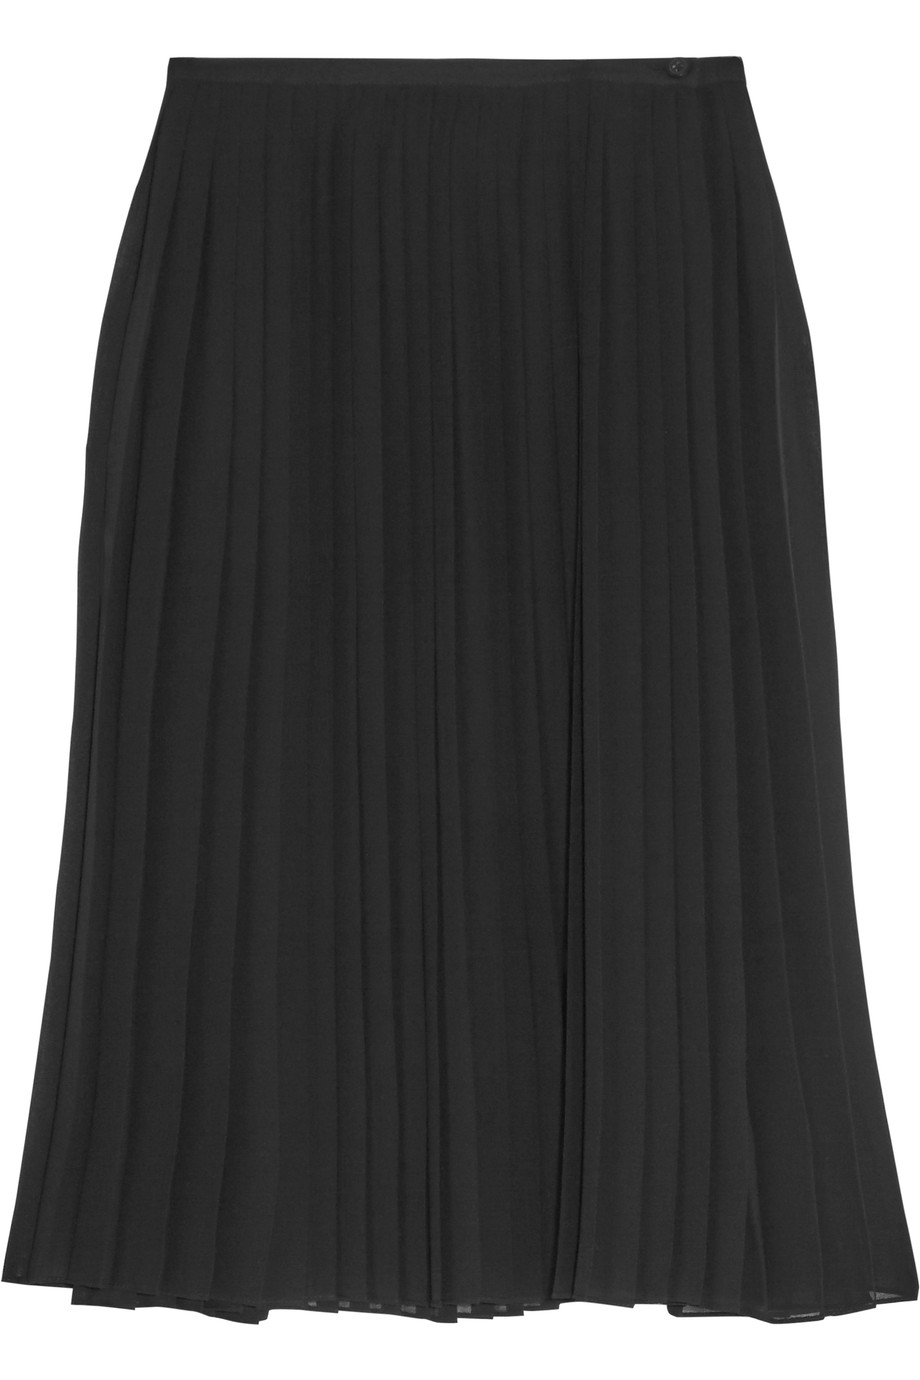 Dkny Pleated Chiffon Skirt | ModeSens